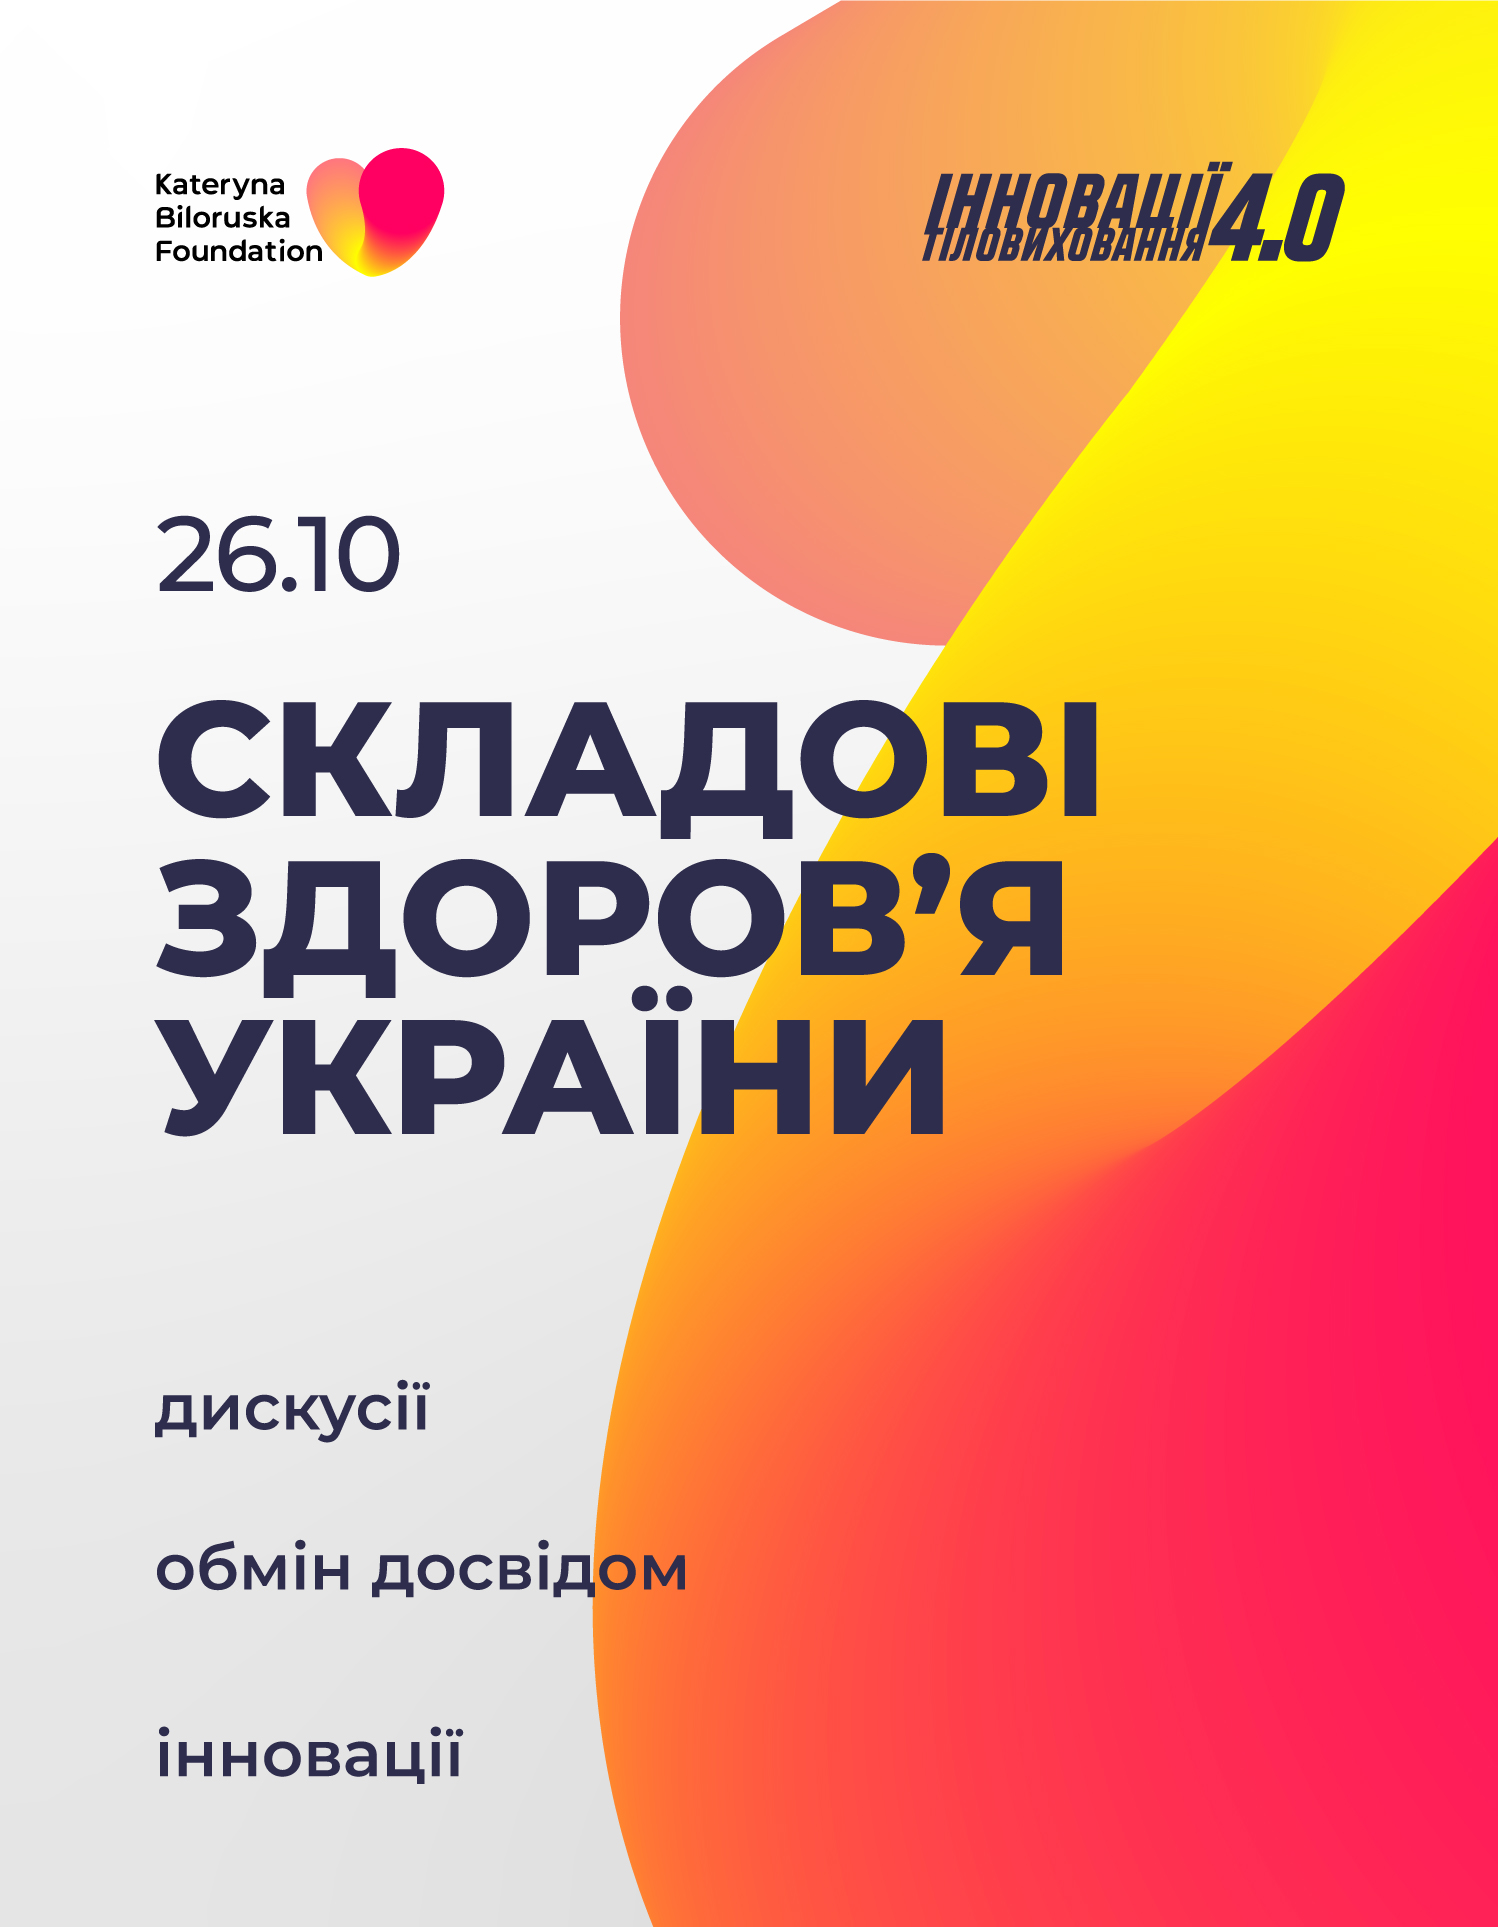 Kateryna Biloruska Foundation - fb-event-cover-it4-kbf-07